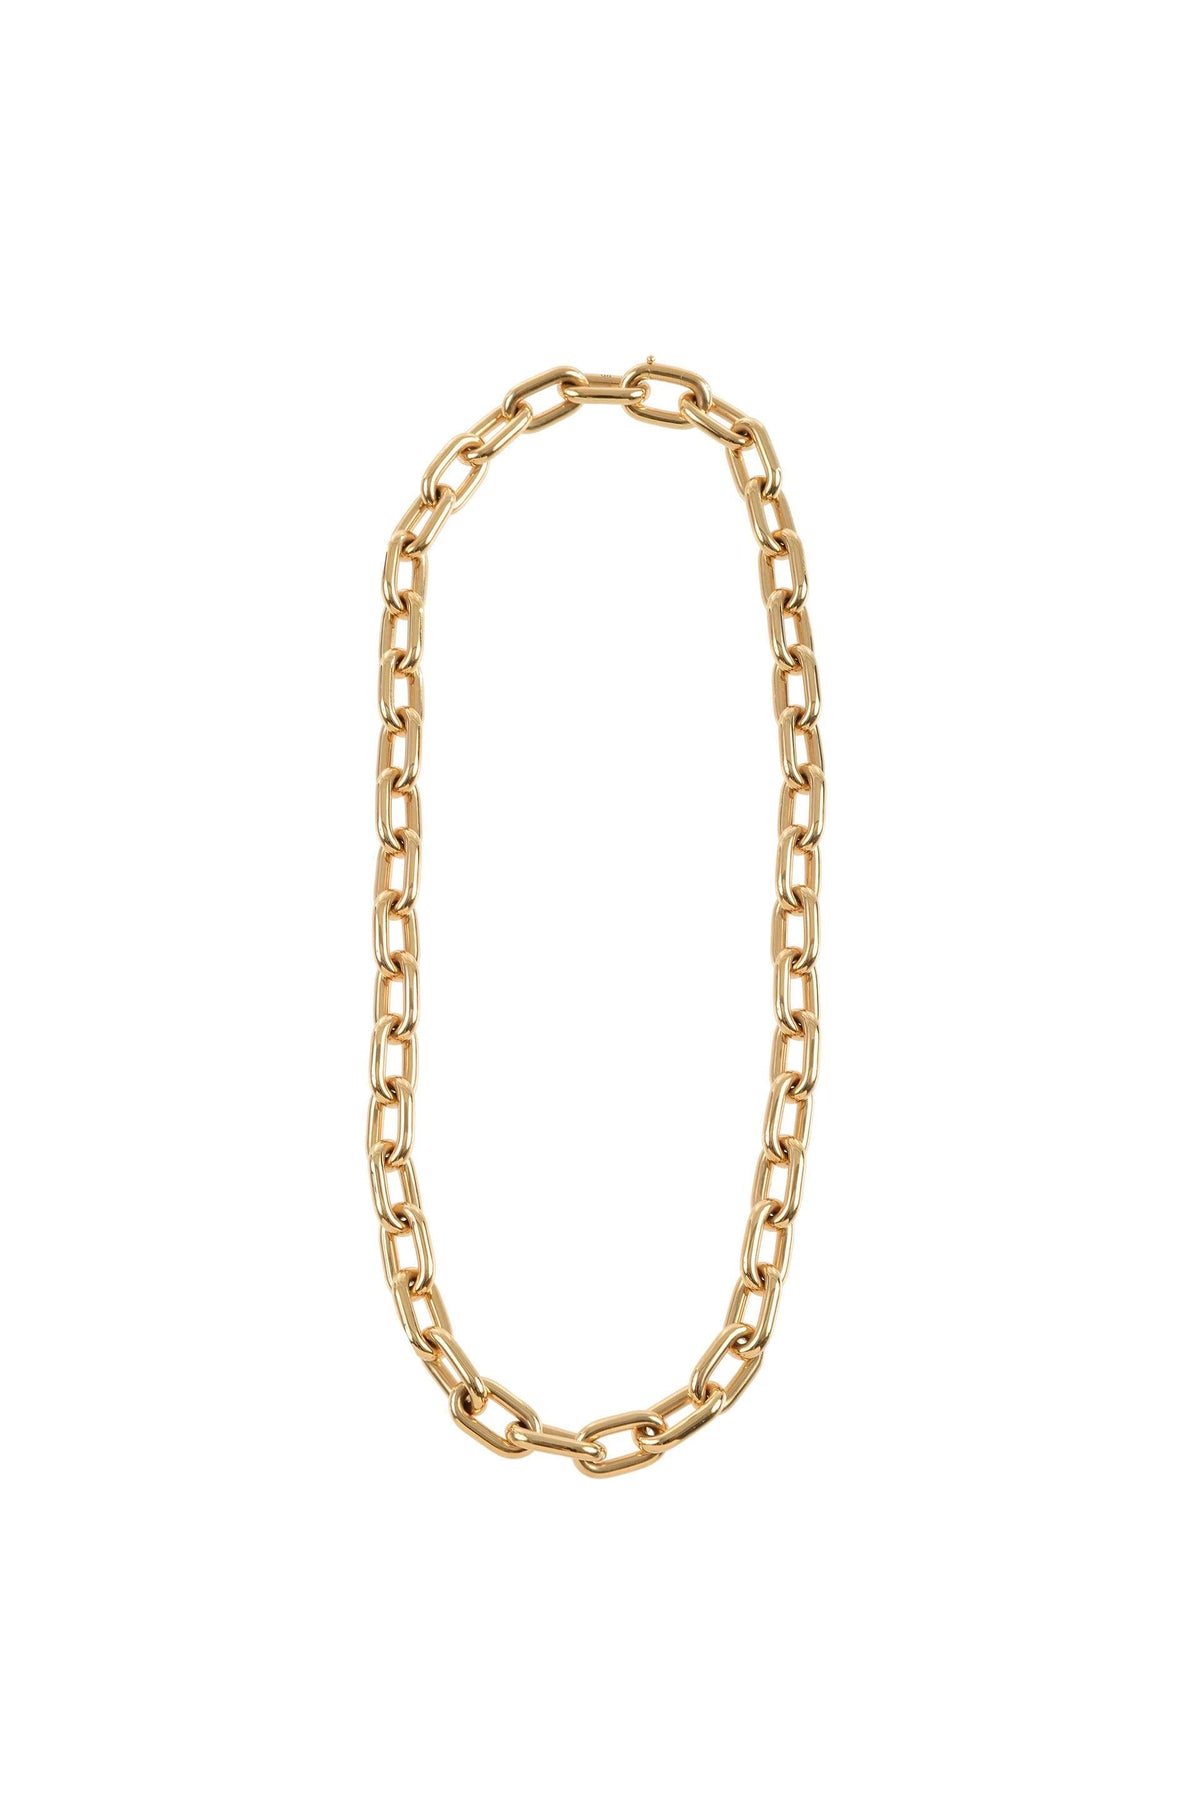 Medium Chain 18k Gold